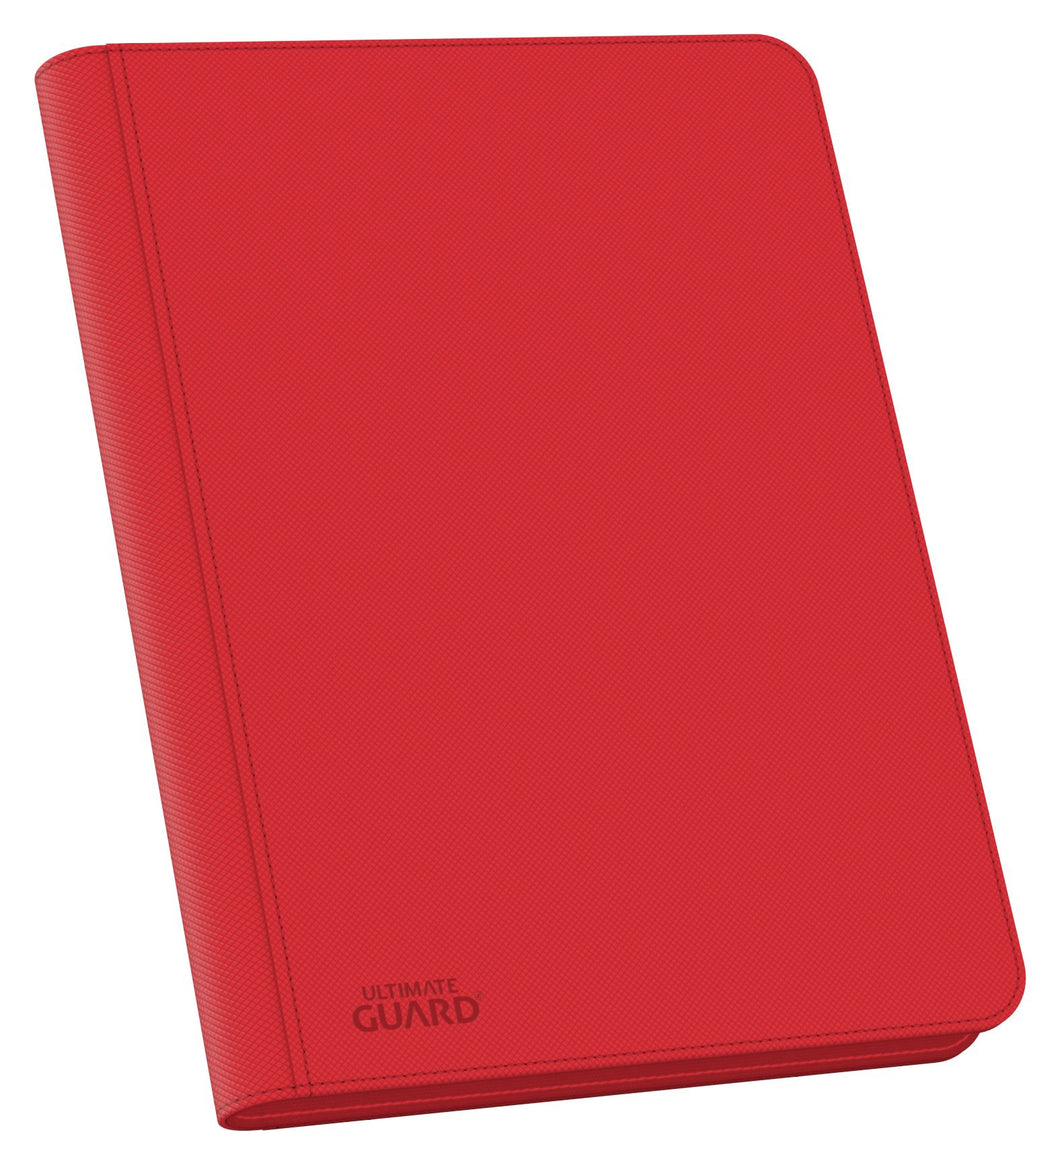 Ultimate Guard 9-Pocket Xenoskin Zipfolio 360 (Red)